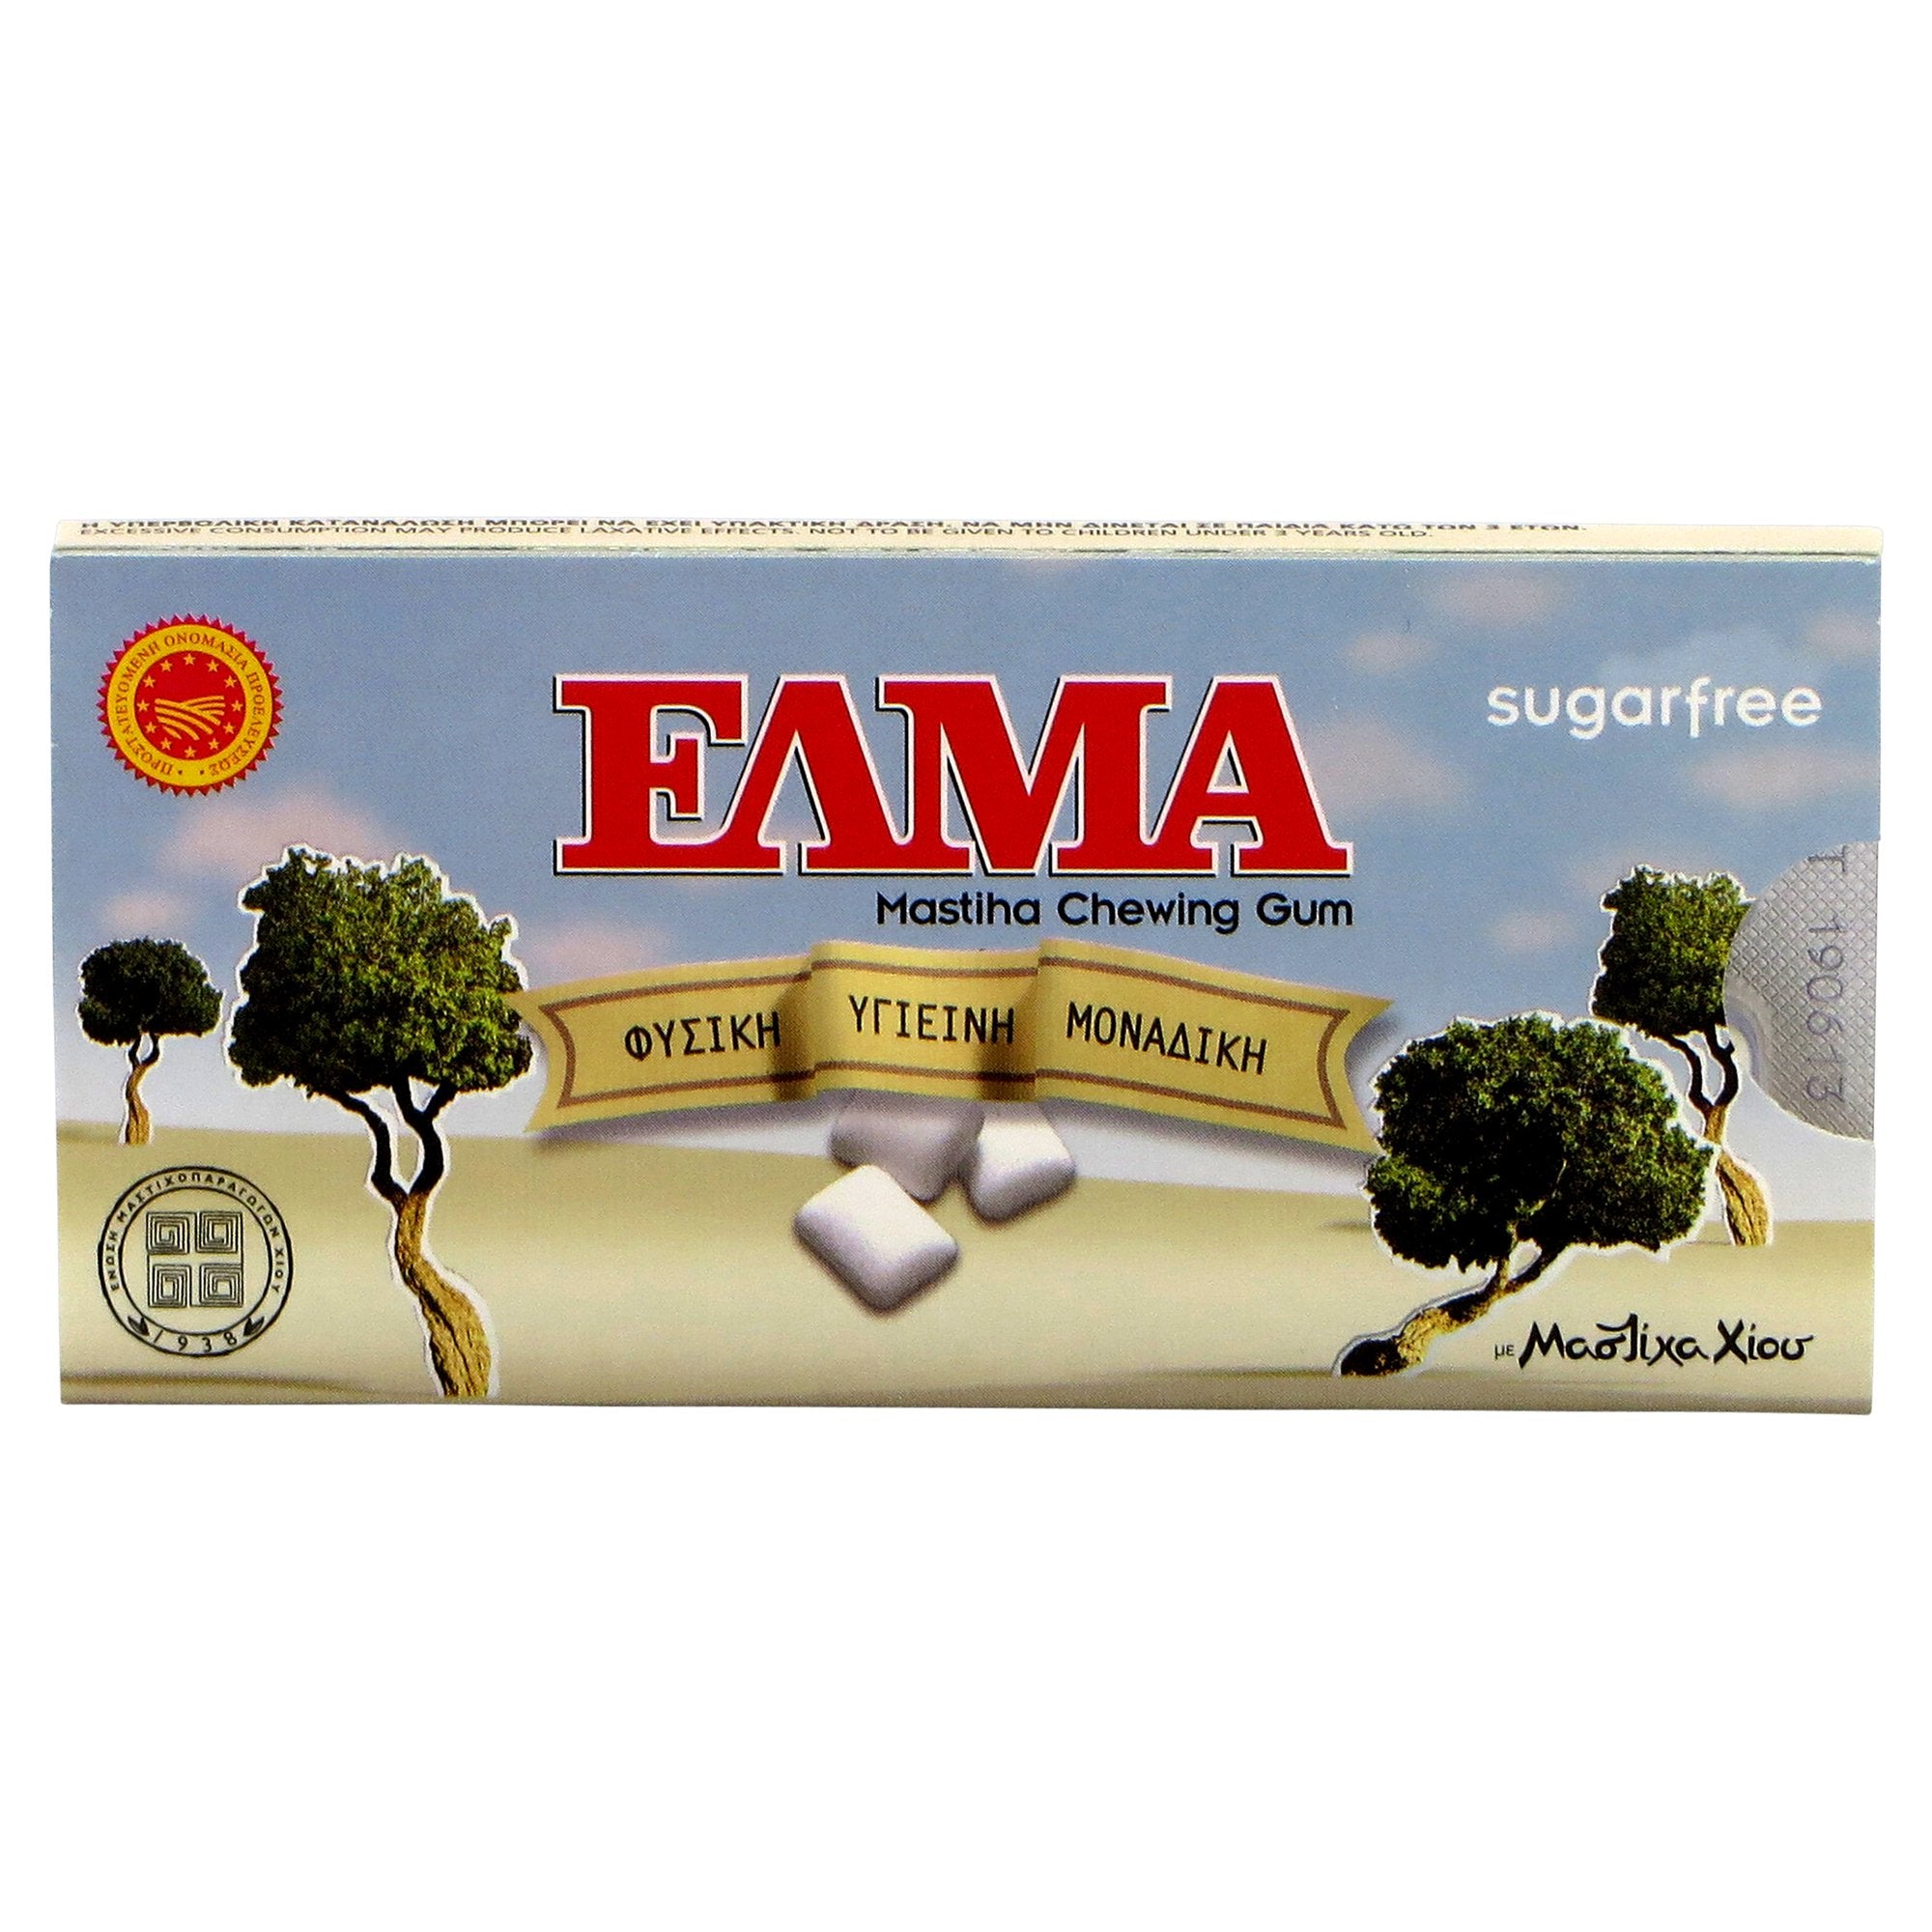 ELMA Mastiha Chewing Gum 13g